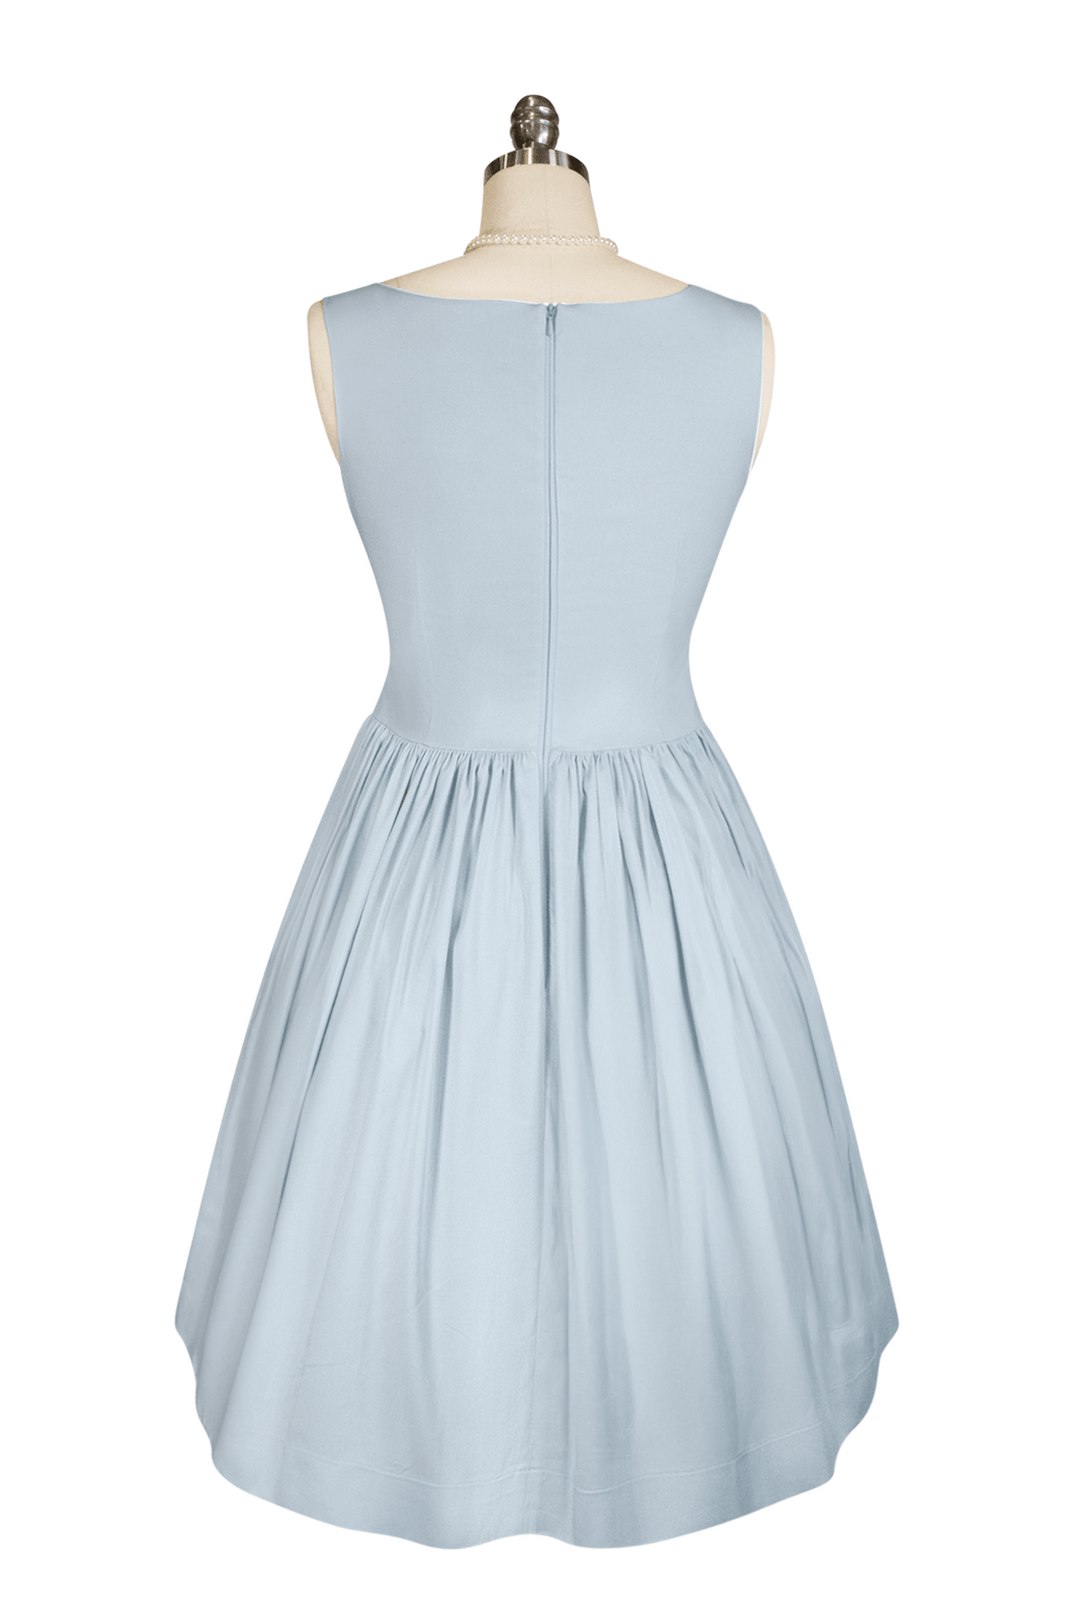 Tea Rose Classic Dress (Blue)